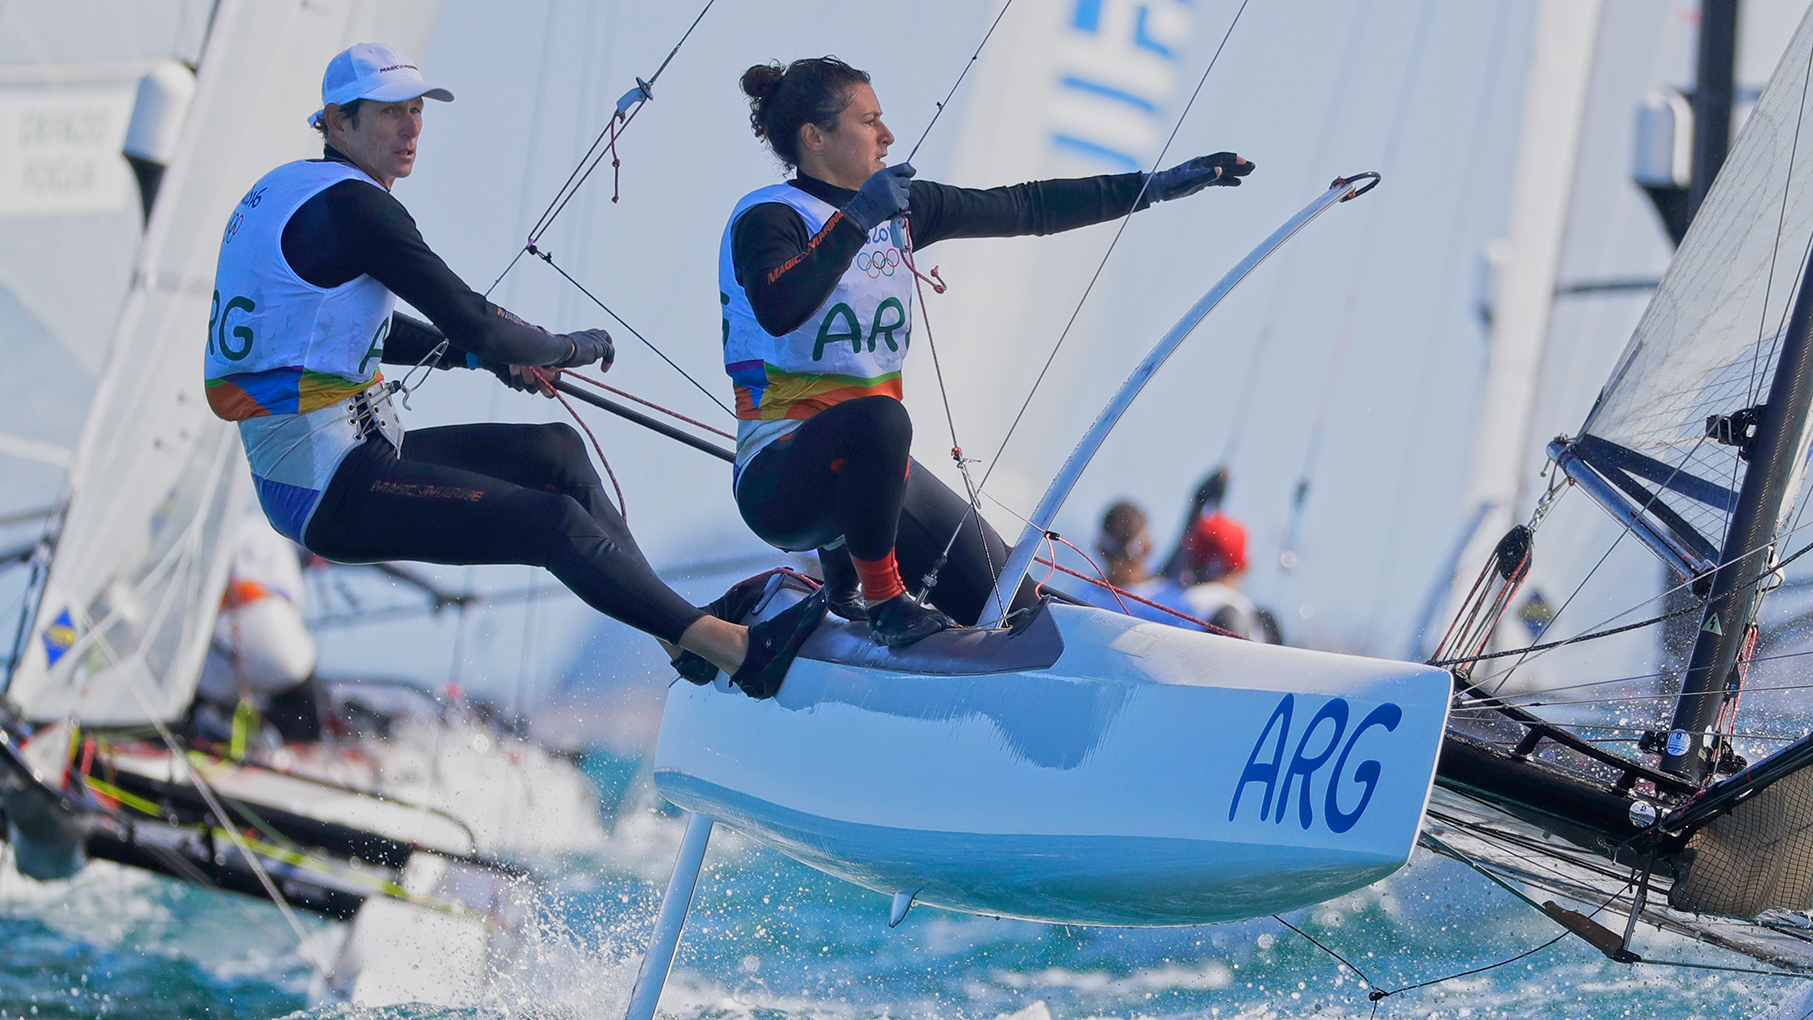 santiago-lange-champion-sailracing-argentina-olimpiai-bajnok-nacra17-catamaran-sailing-vitorlazas-rio2016-hajozashu